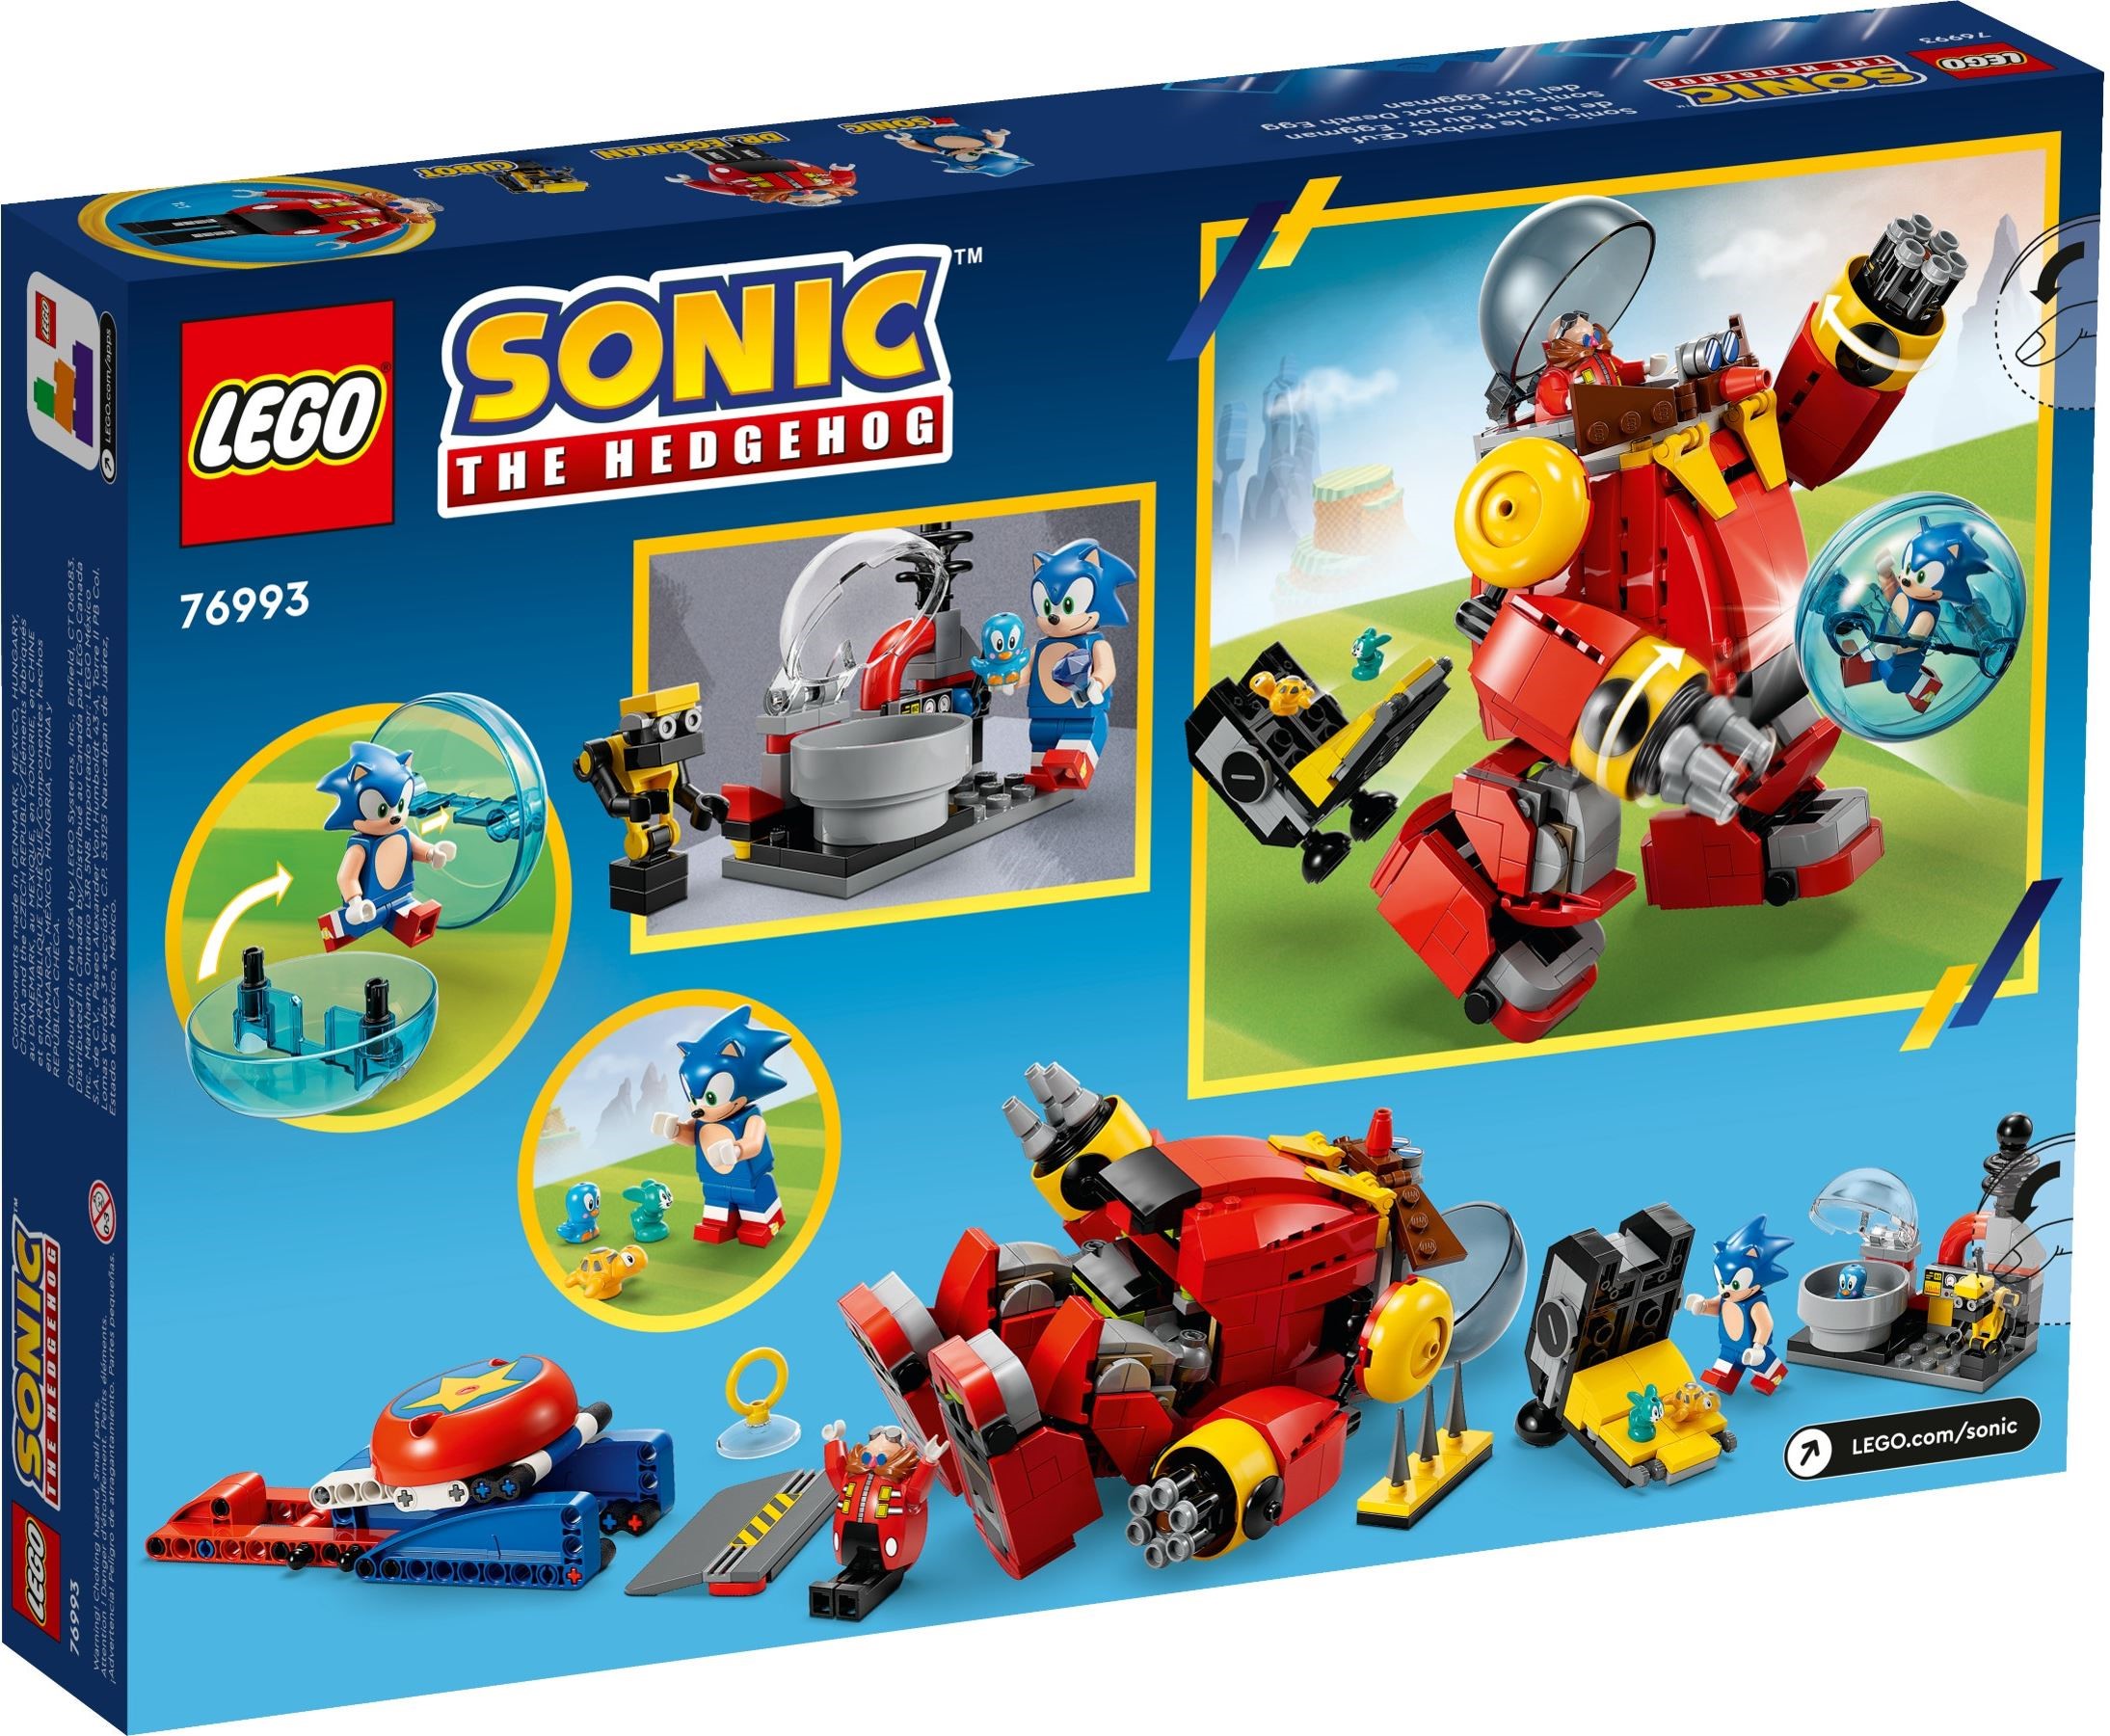 Four new LEGO Sonic the Hedgehog sets revealed